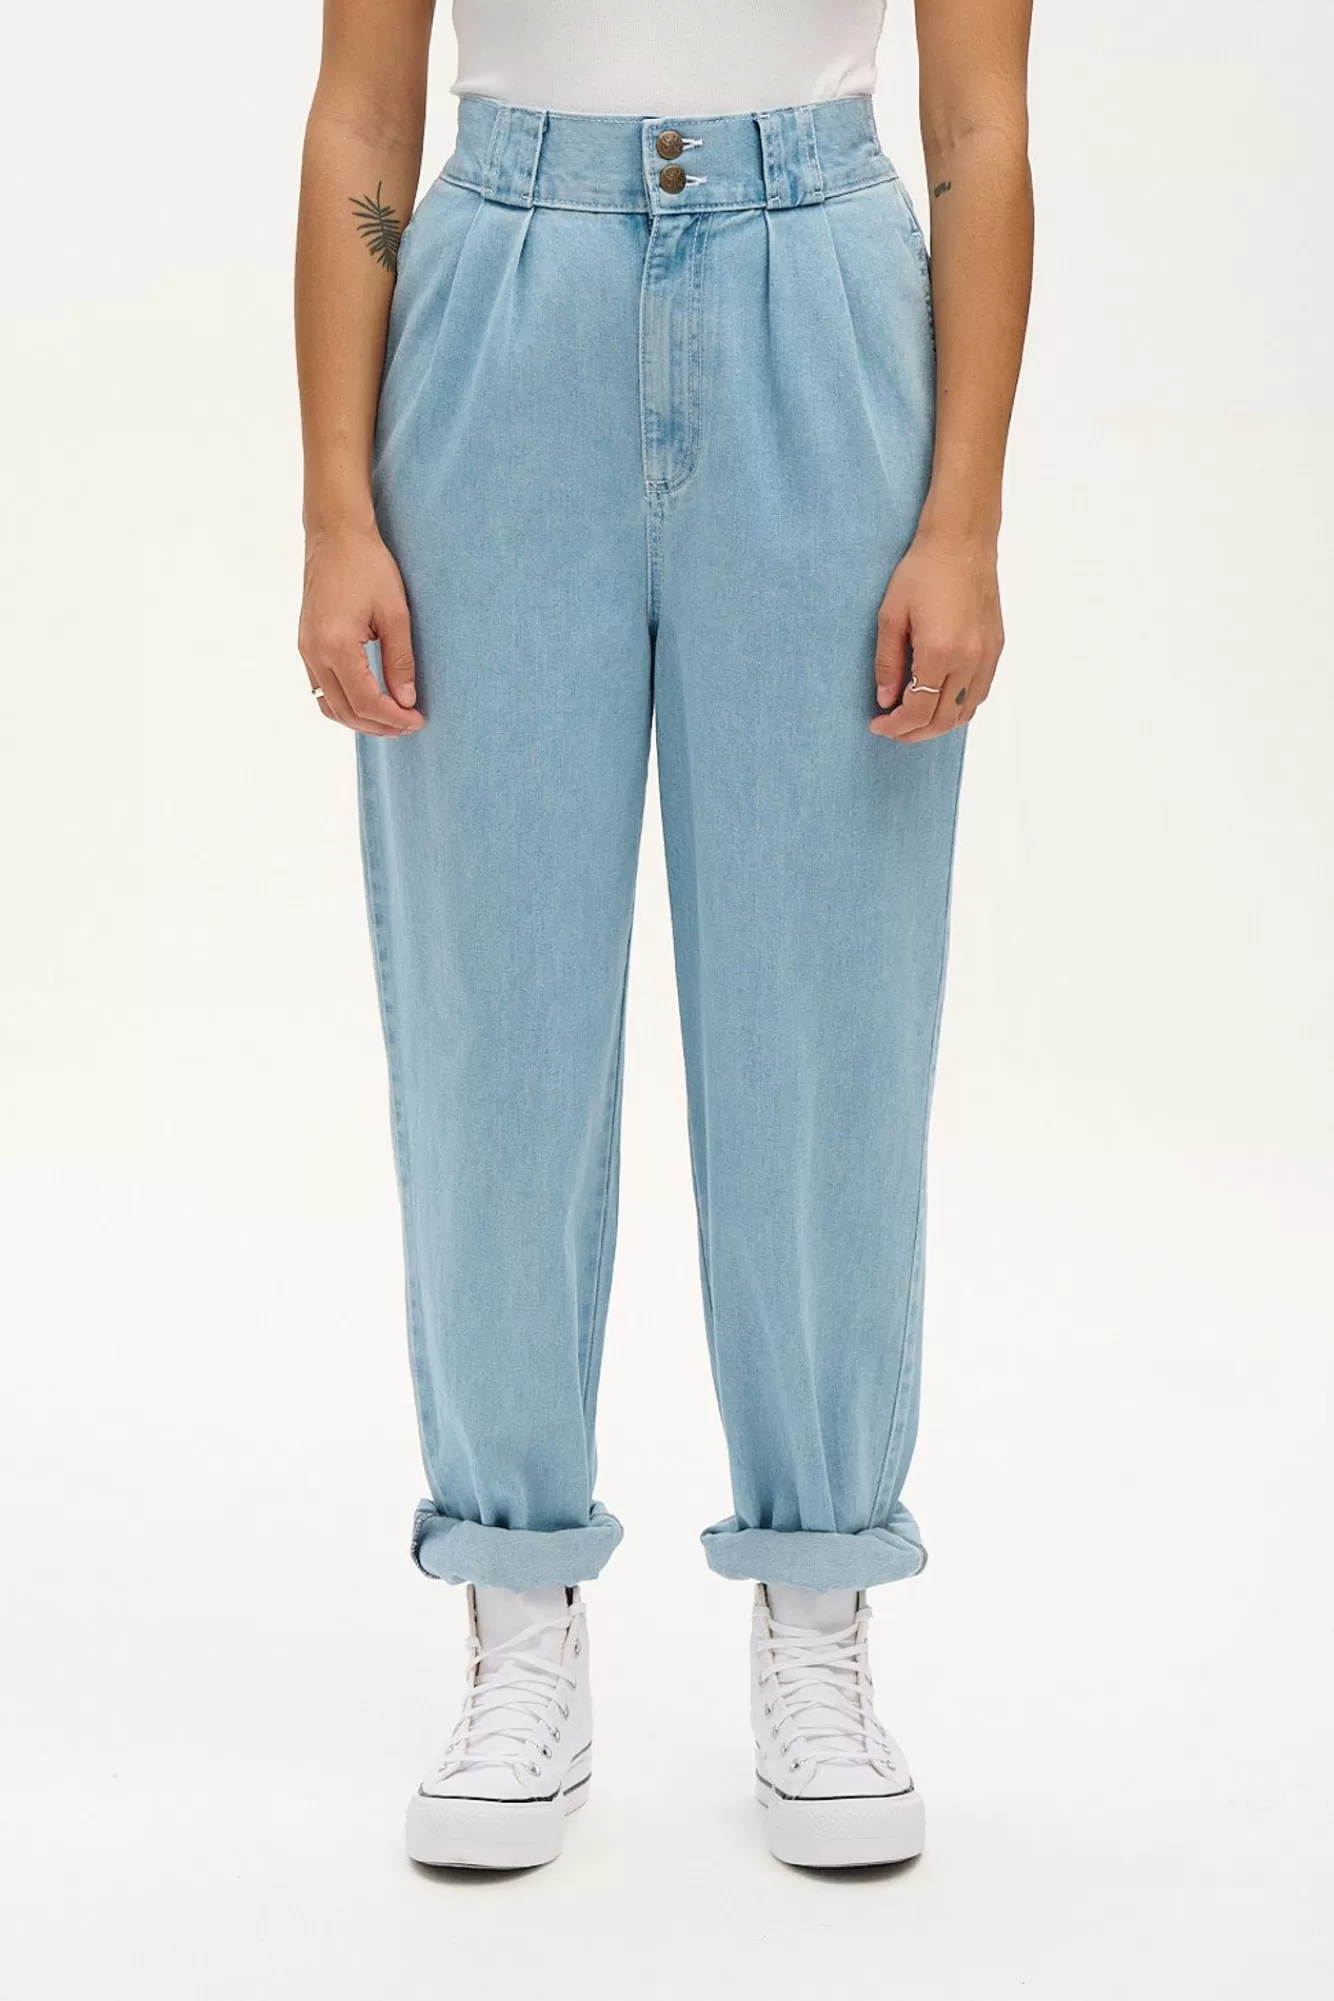 Addison Tapered Jeans: Organic Denim - Light Wash Blue-Lucy & Yak Cheap